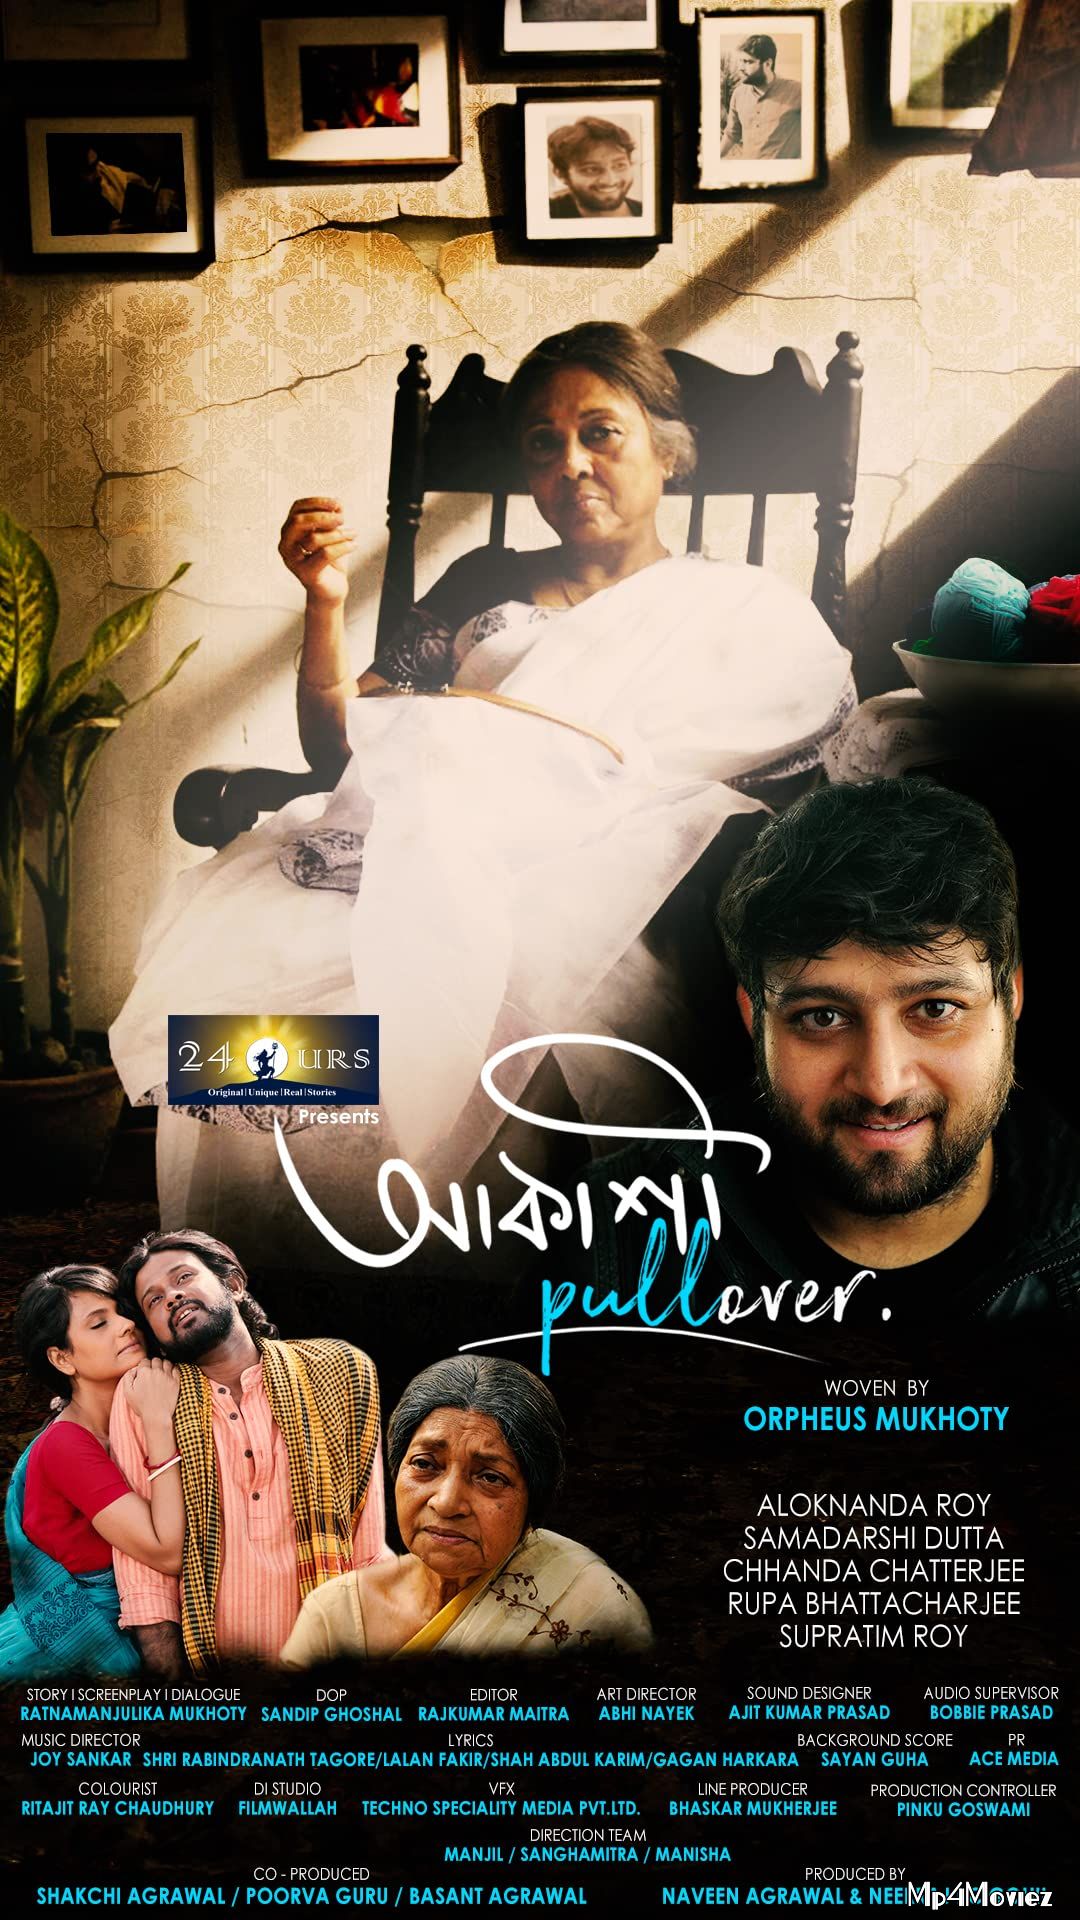 Aakashee Pullover (2018) Bengali Full Movie download full movie